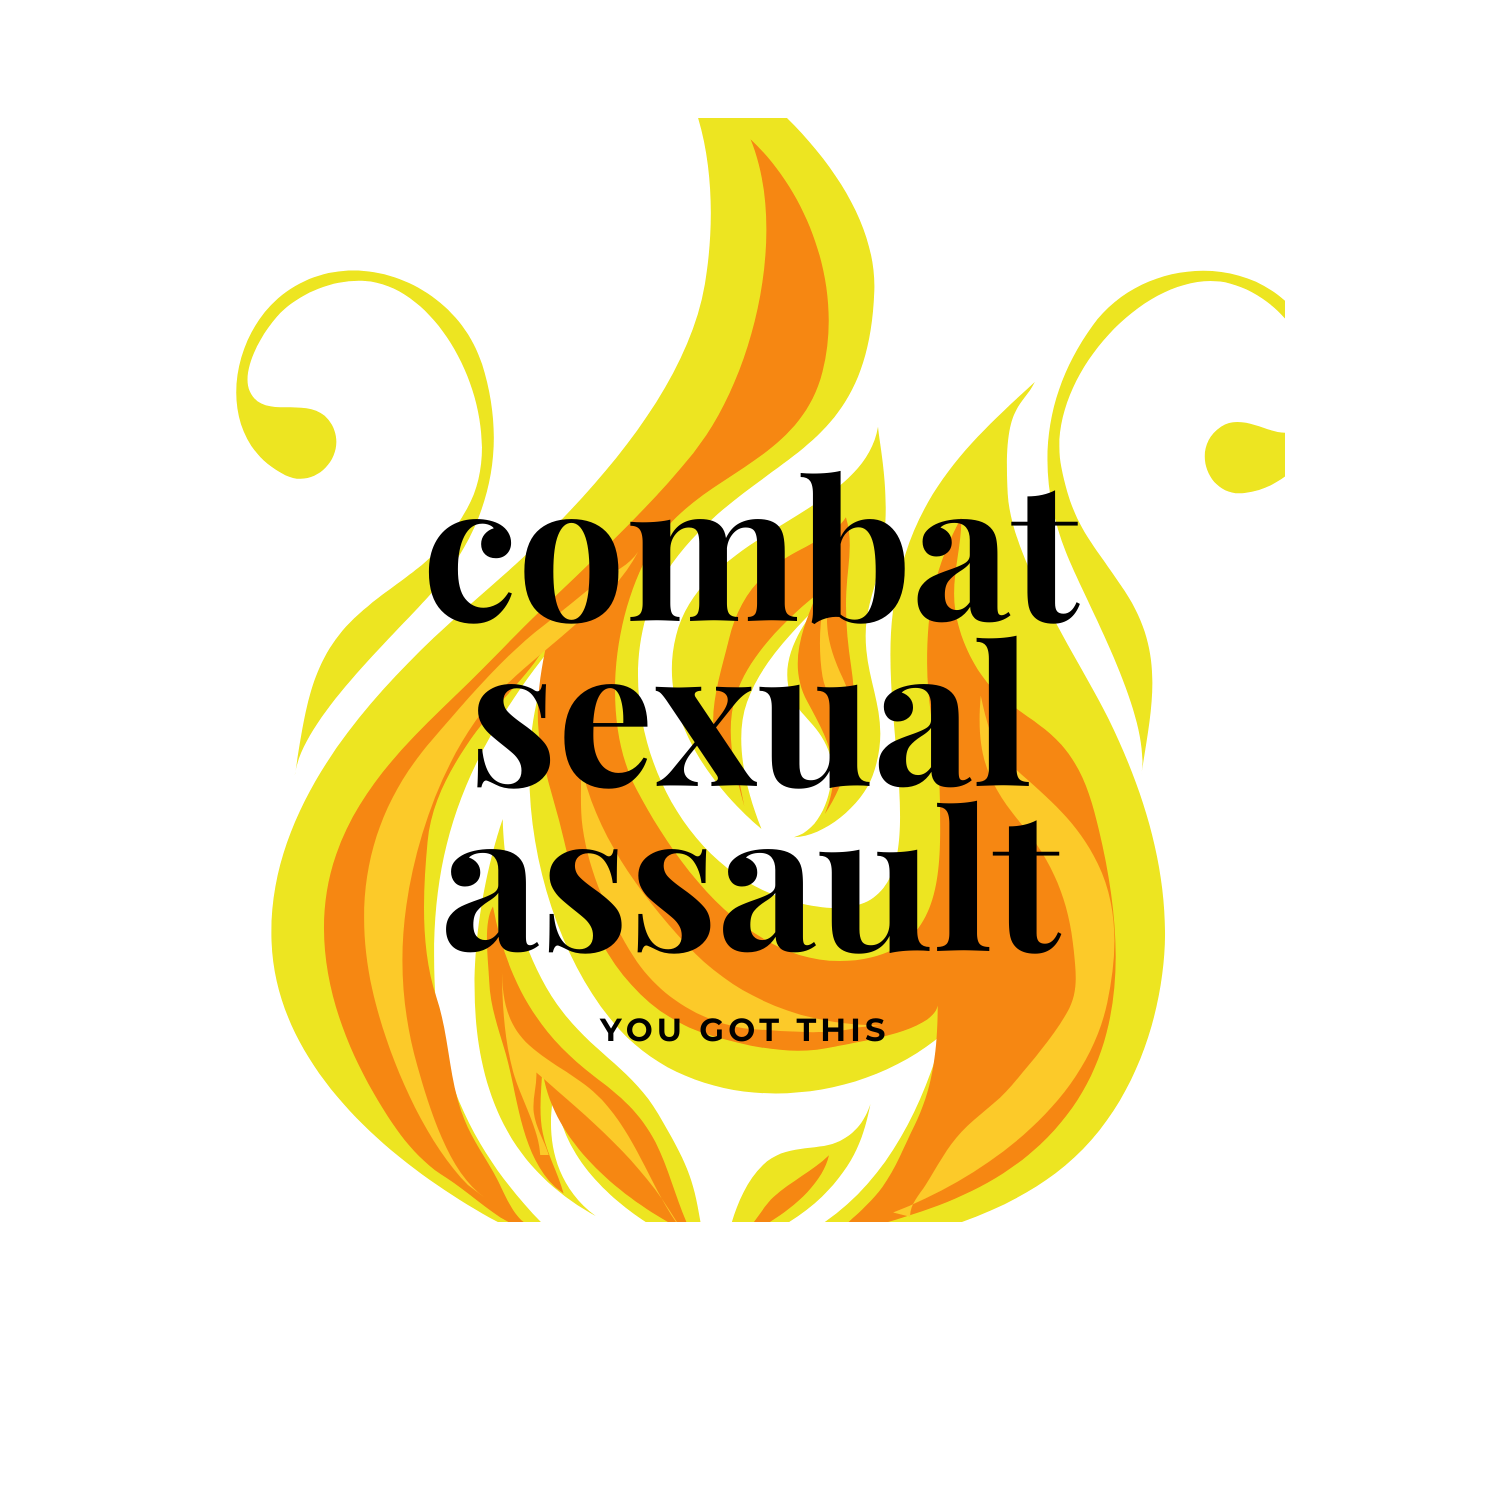 Combat Sexual Assault